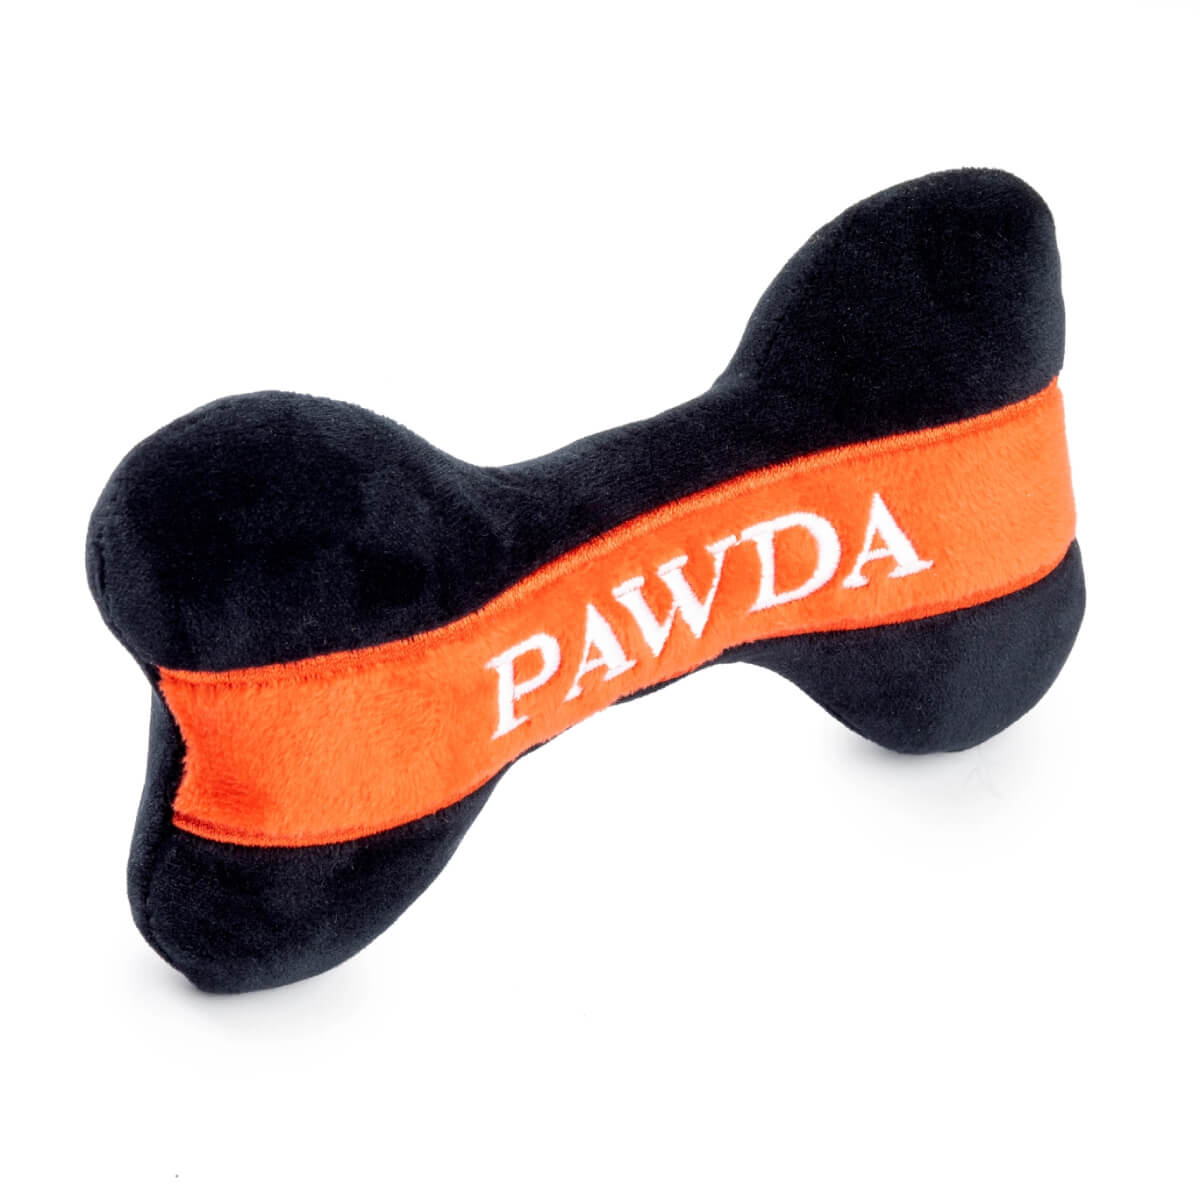 Pawda Bone Squeaker Dog Toy black front | MILK MONEY milkmoney.co | white elephant gift ideas, gift, mother's day gift ideas, white elephant gift, gift shops near me